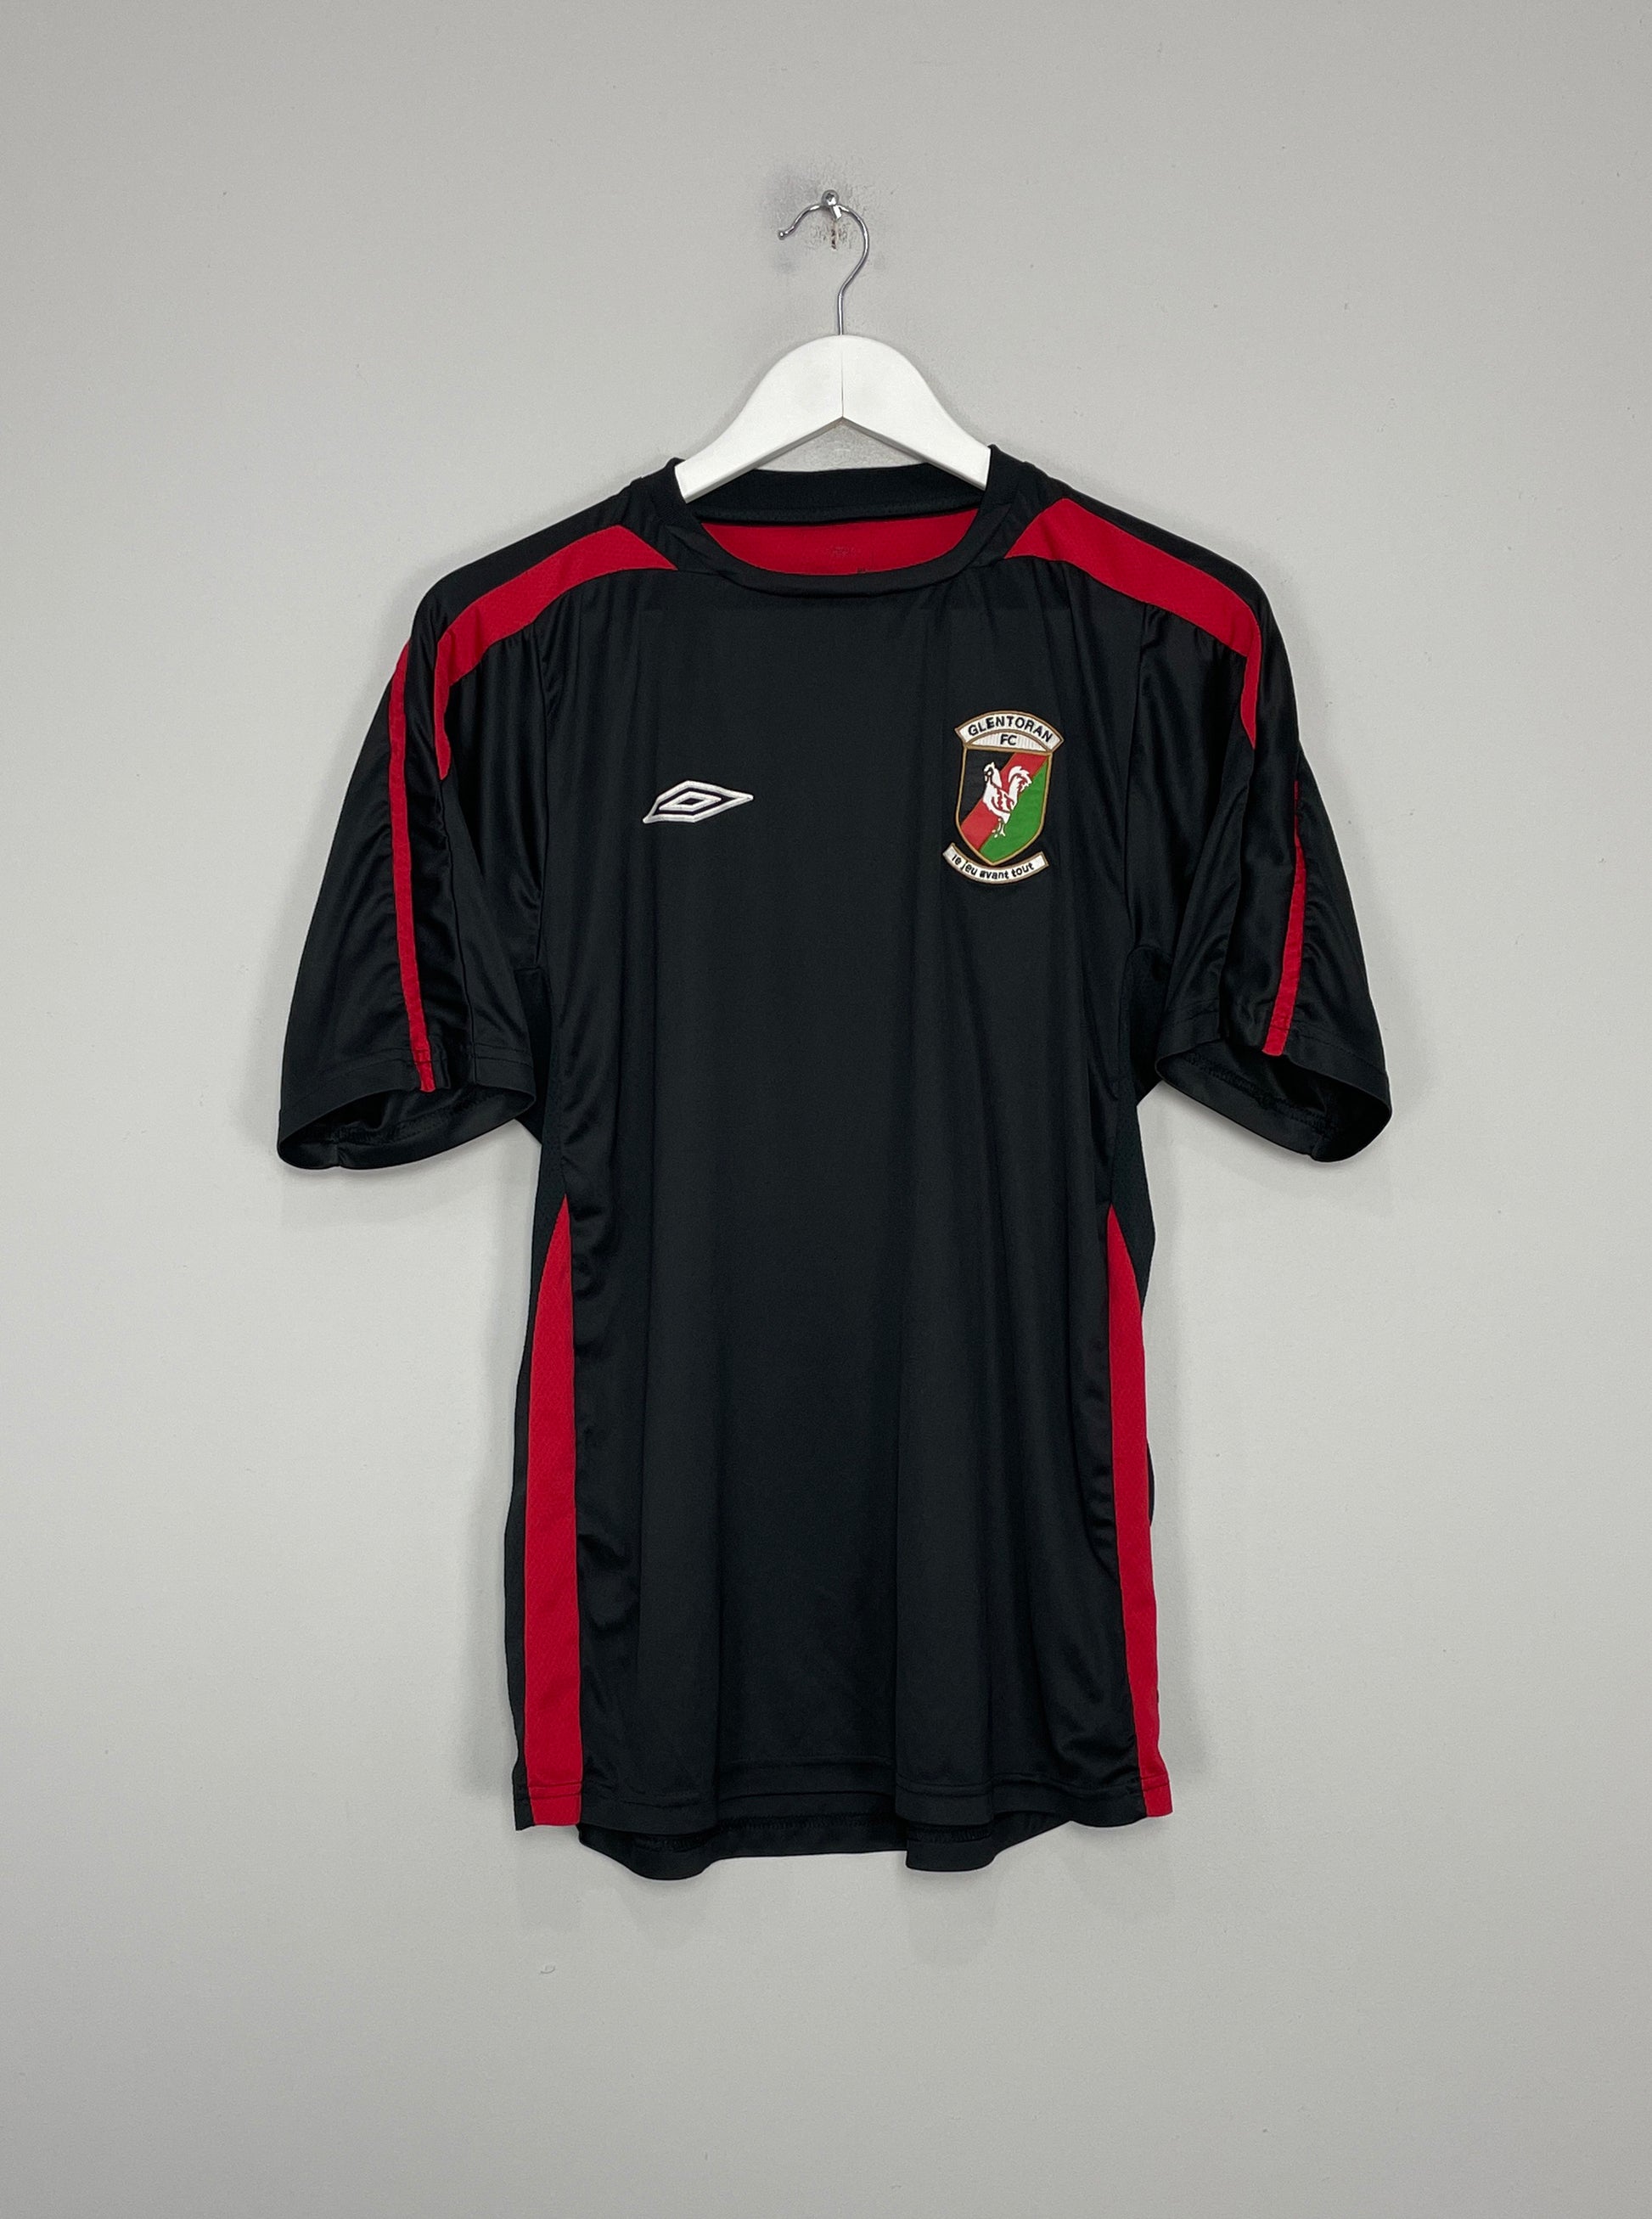 Image of the Glentoran shirt from the 2006/08 season